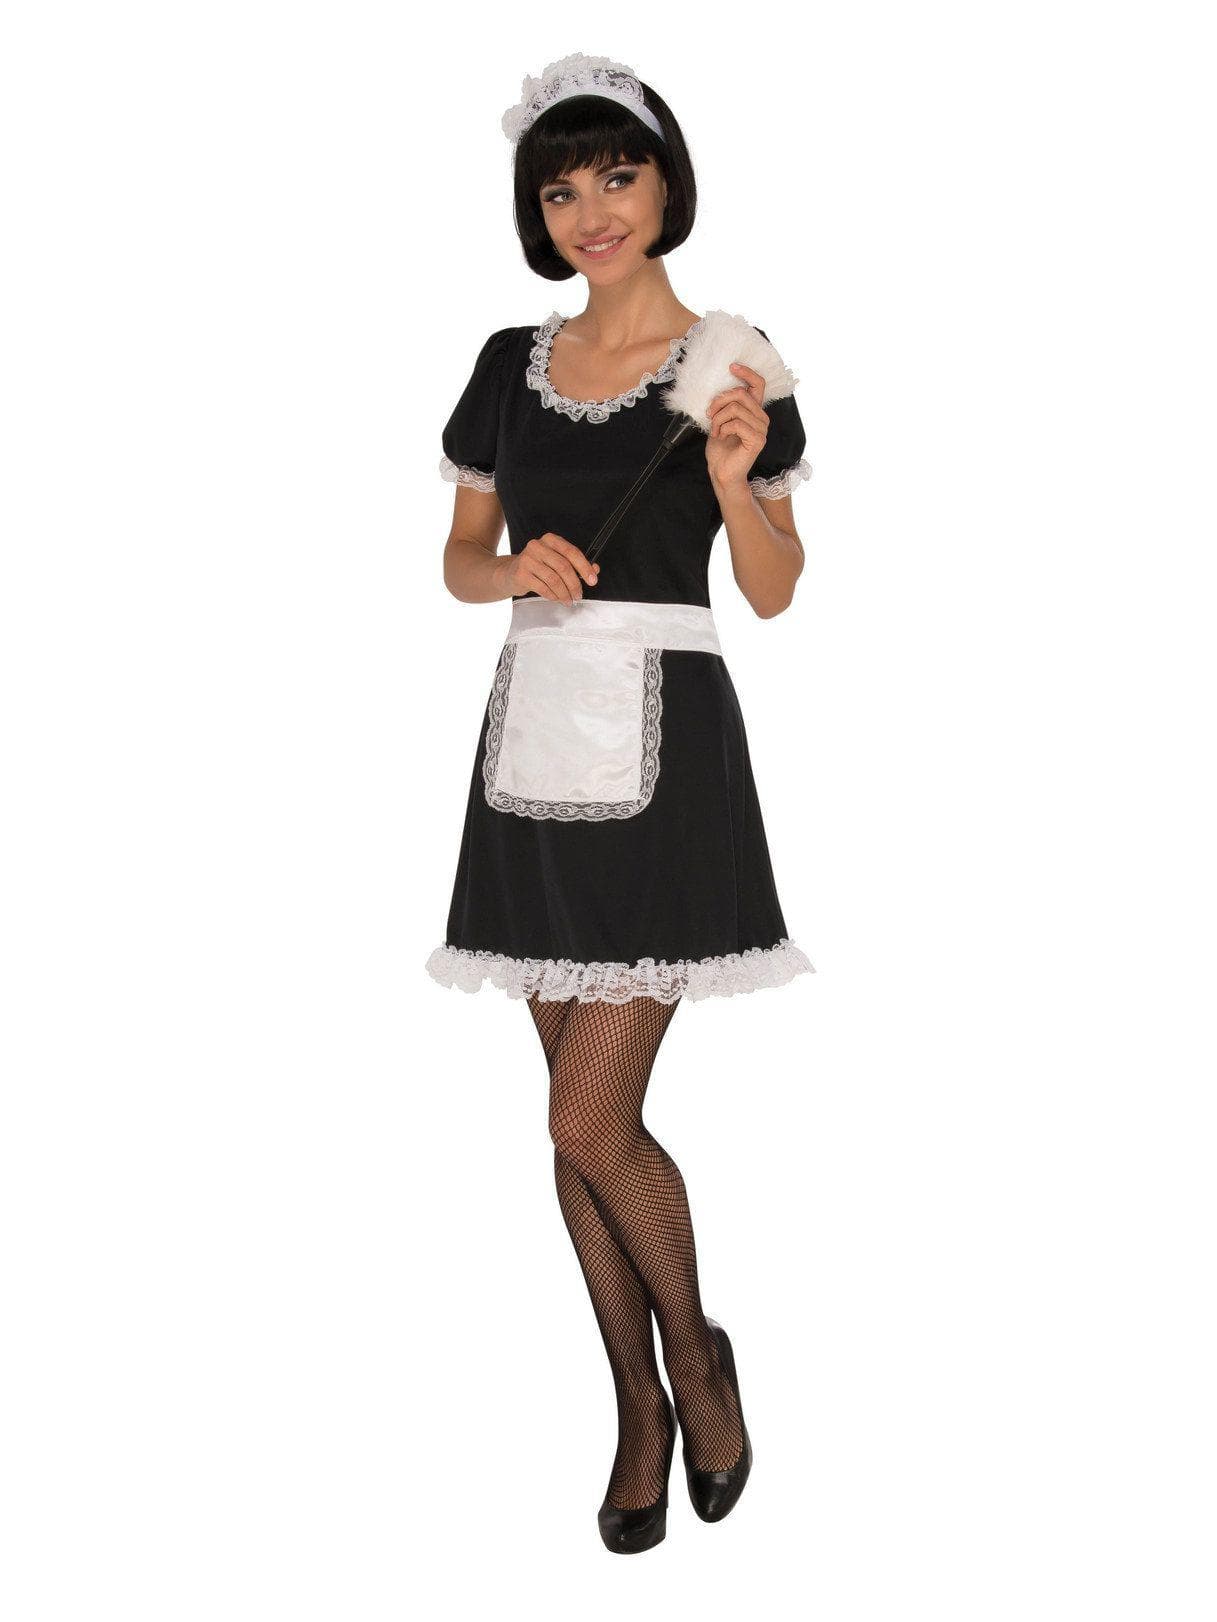 Adult Saucy Maid Costume - costumes.com